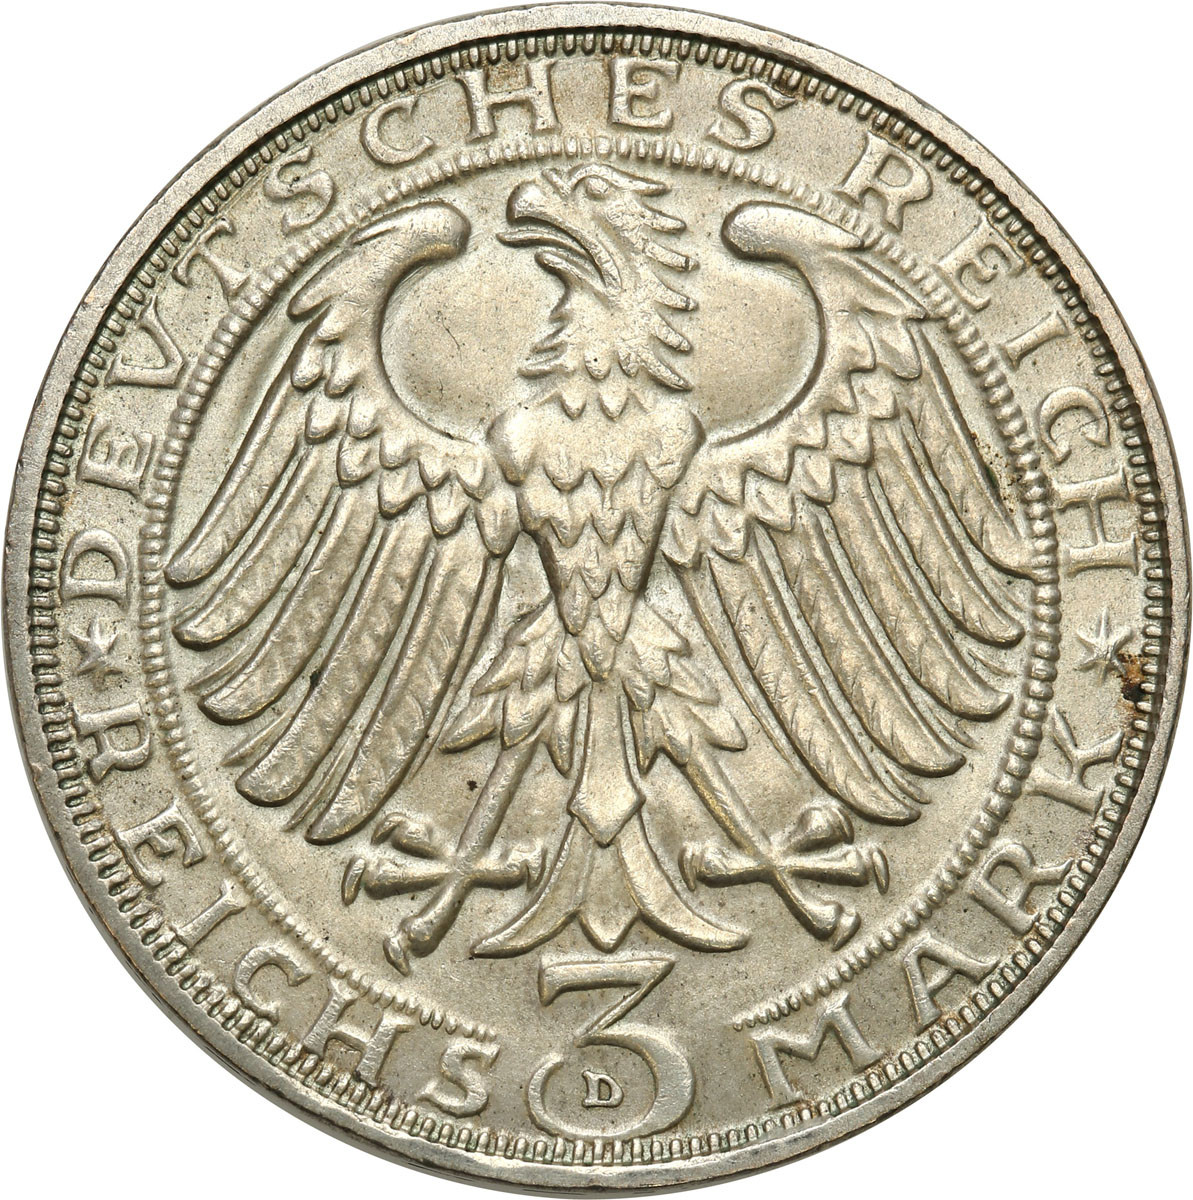 Niemcy, Weimar. 3 Marki 1928 D, Monachium - RZADKIE